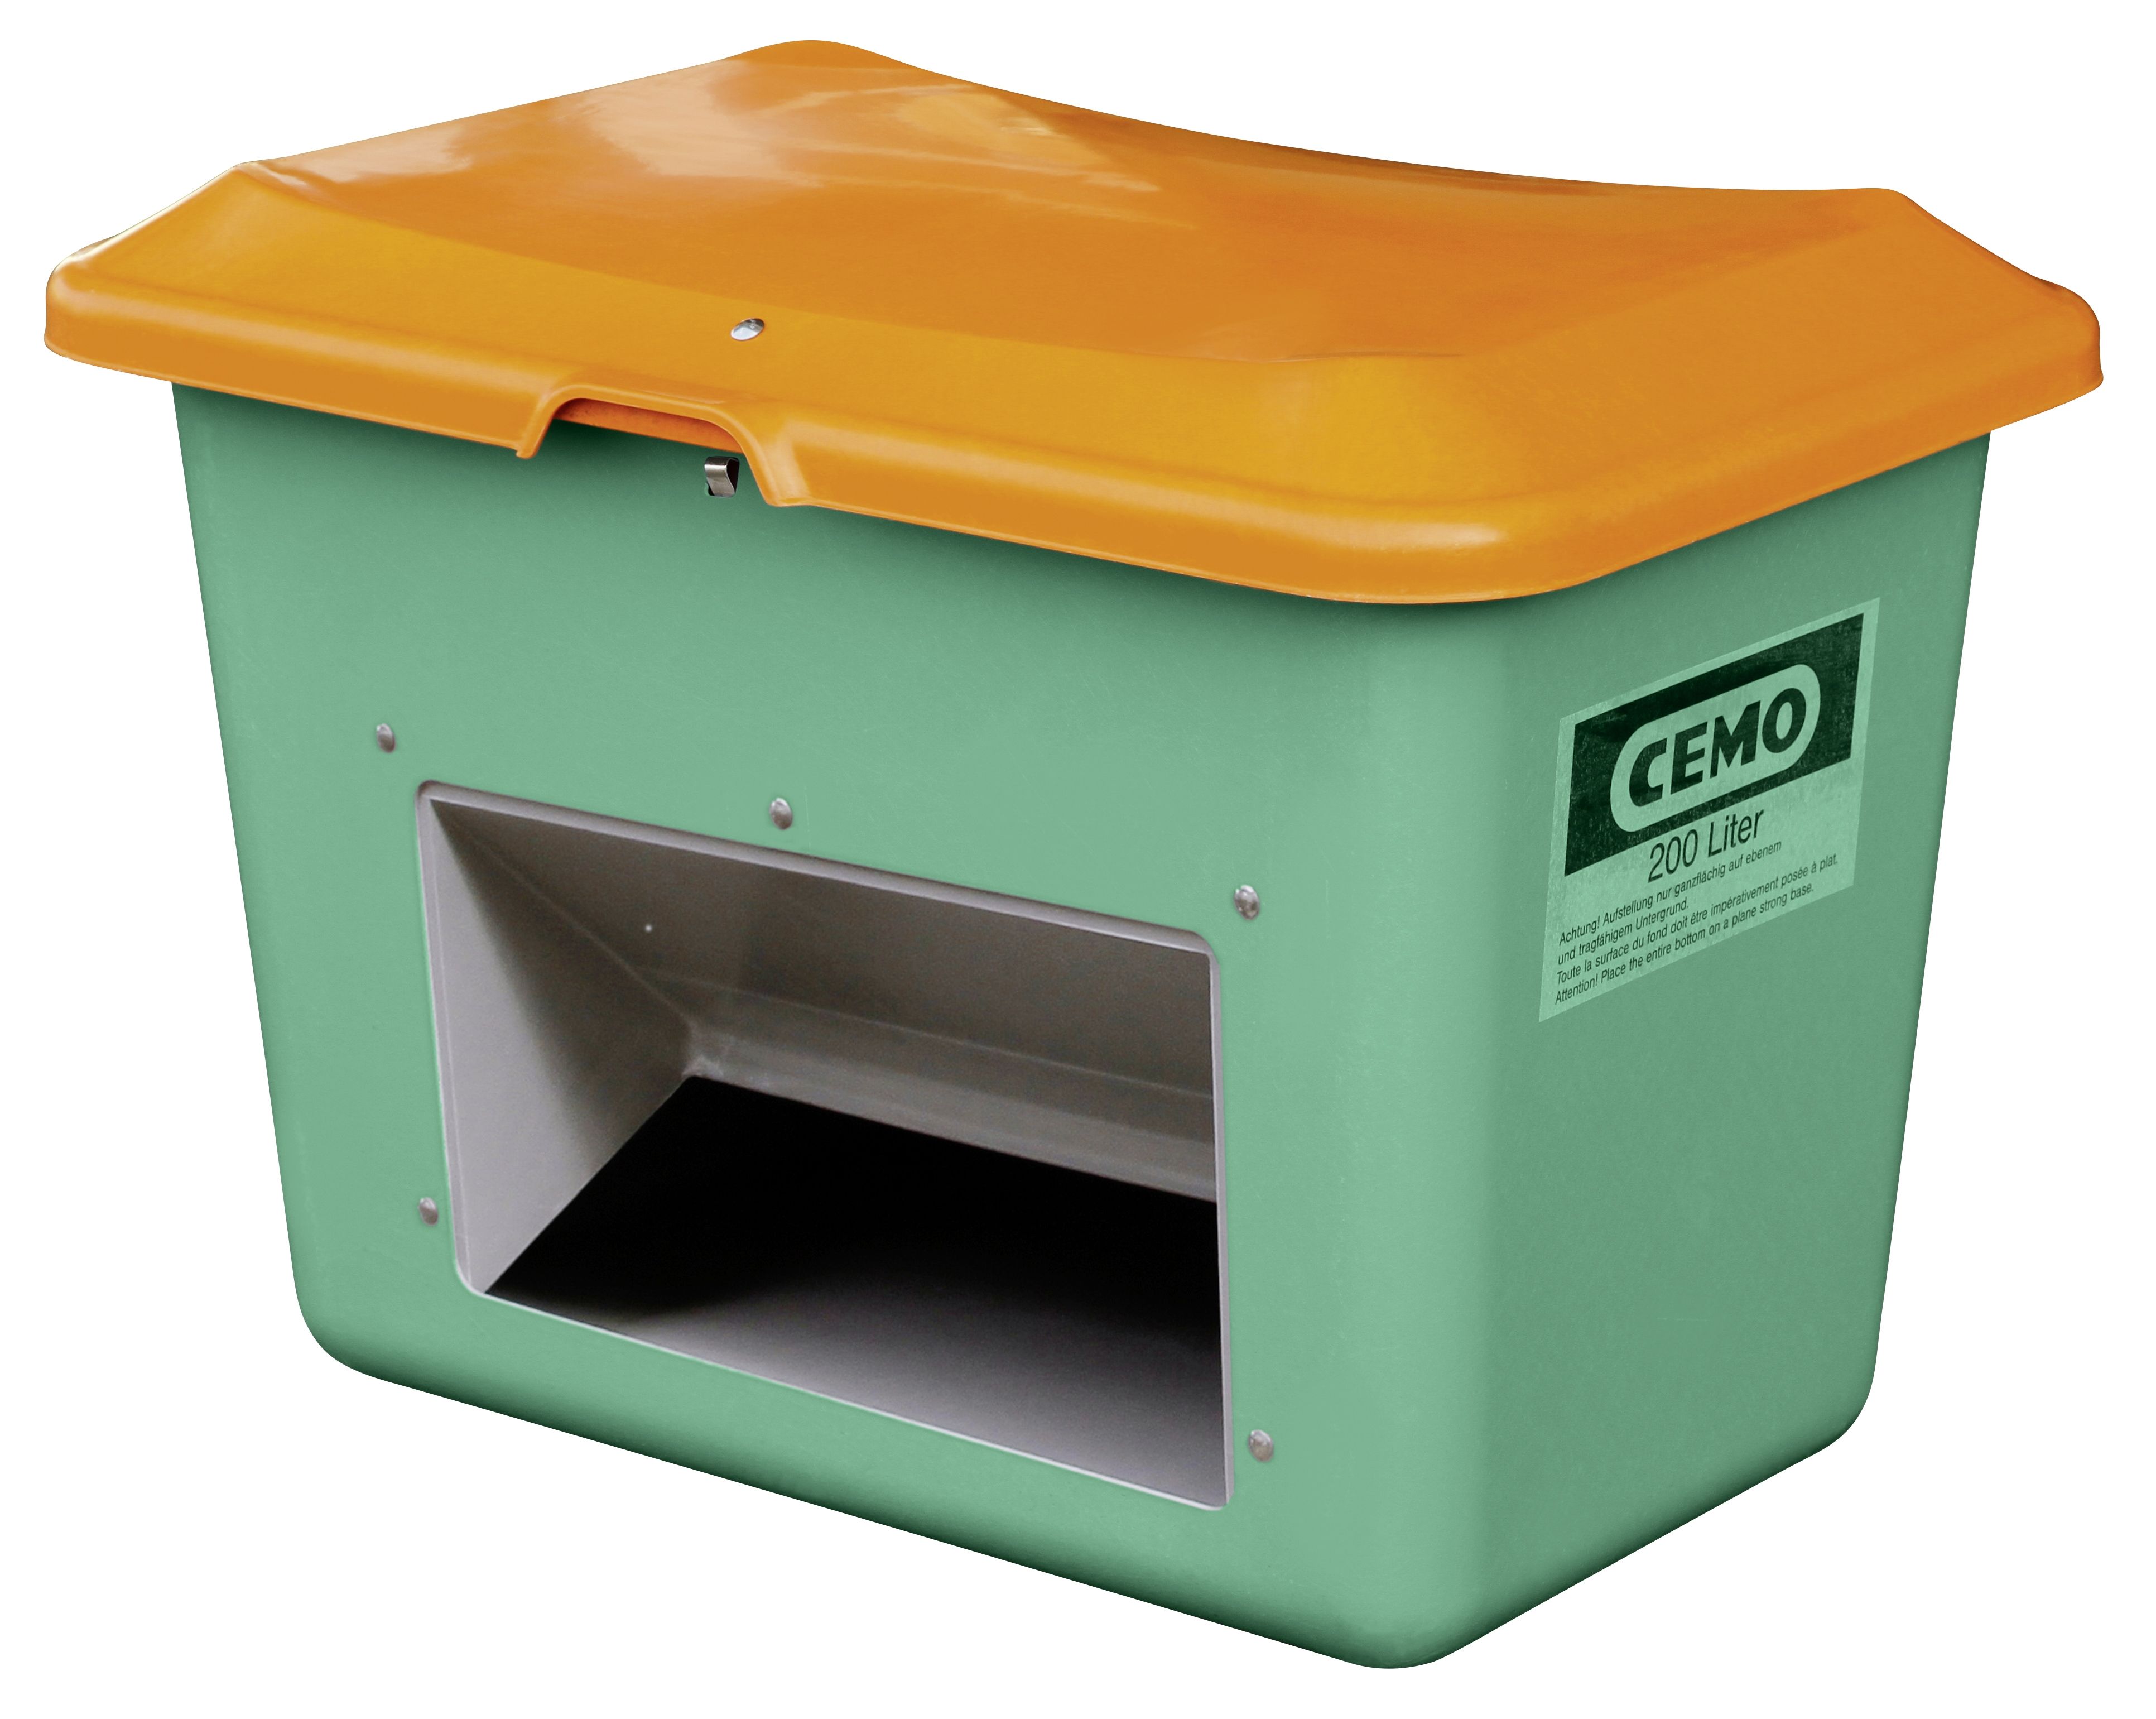 CEMO GFK Streugutbehälter PLUS3, 200 l, grün/orange - 10575